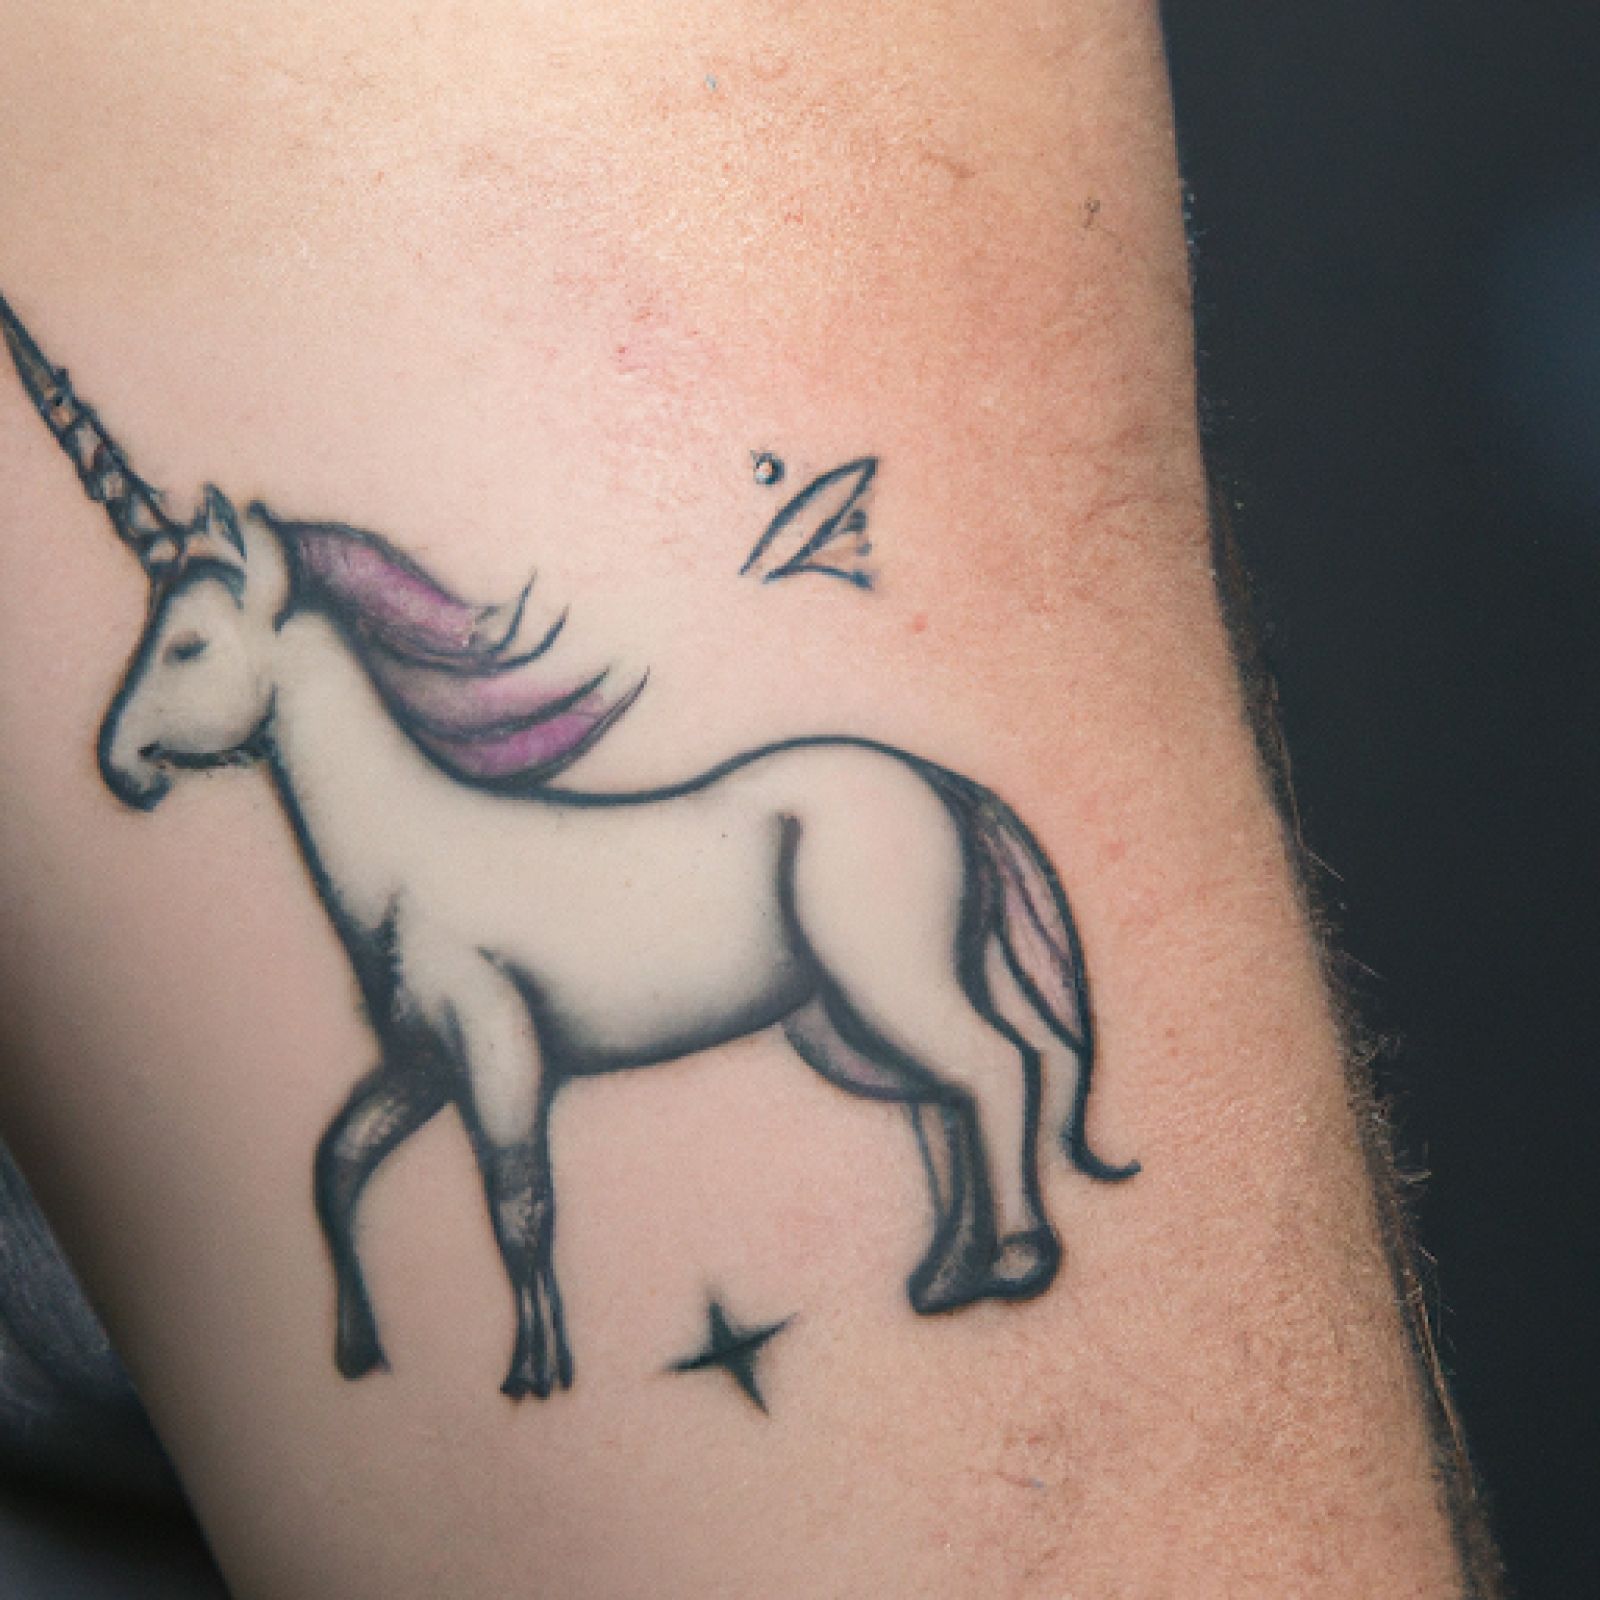 Unicorn tattoo on forearm for men